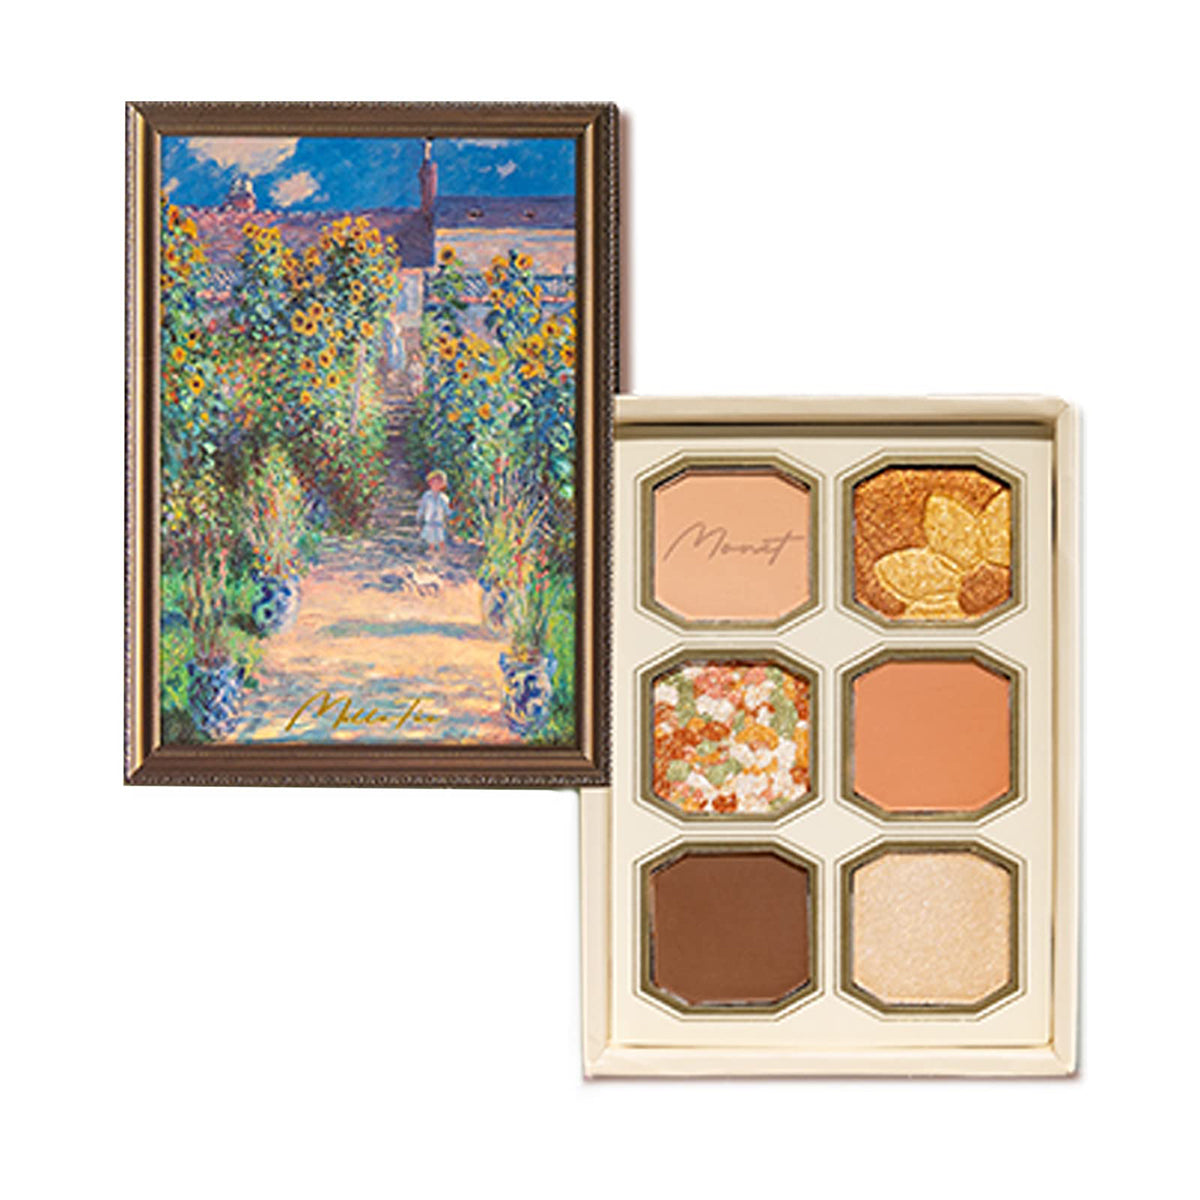 Painting Eyeshadow Palette-05 Monet's garden-1-Millefee-Makeup-cosmetics